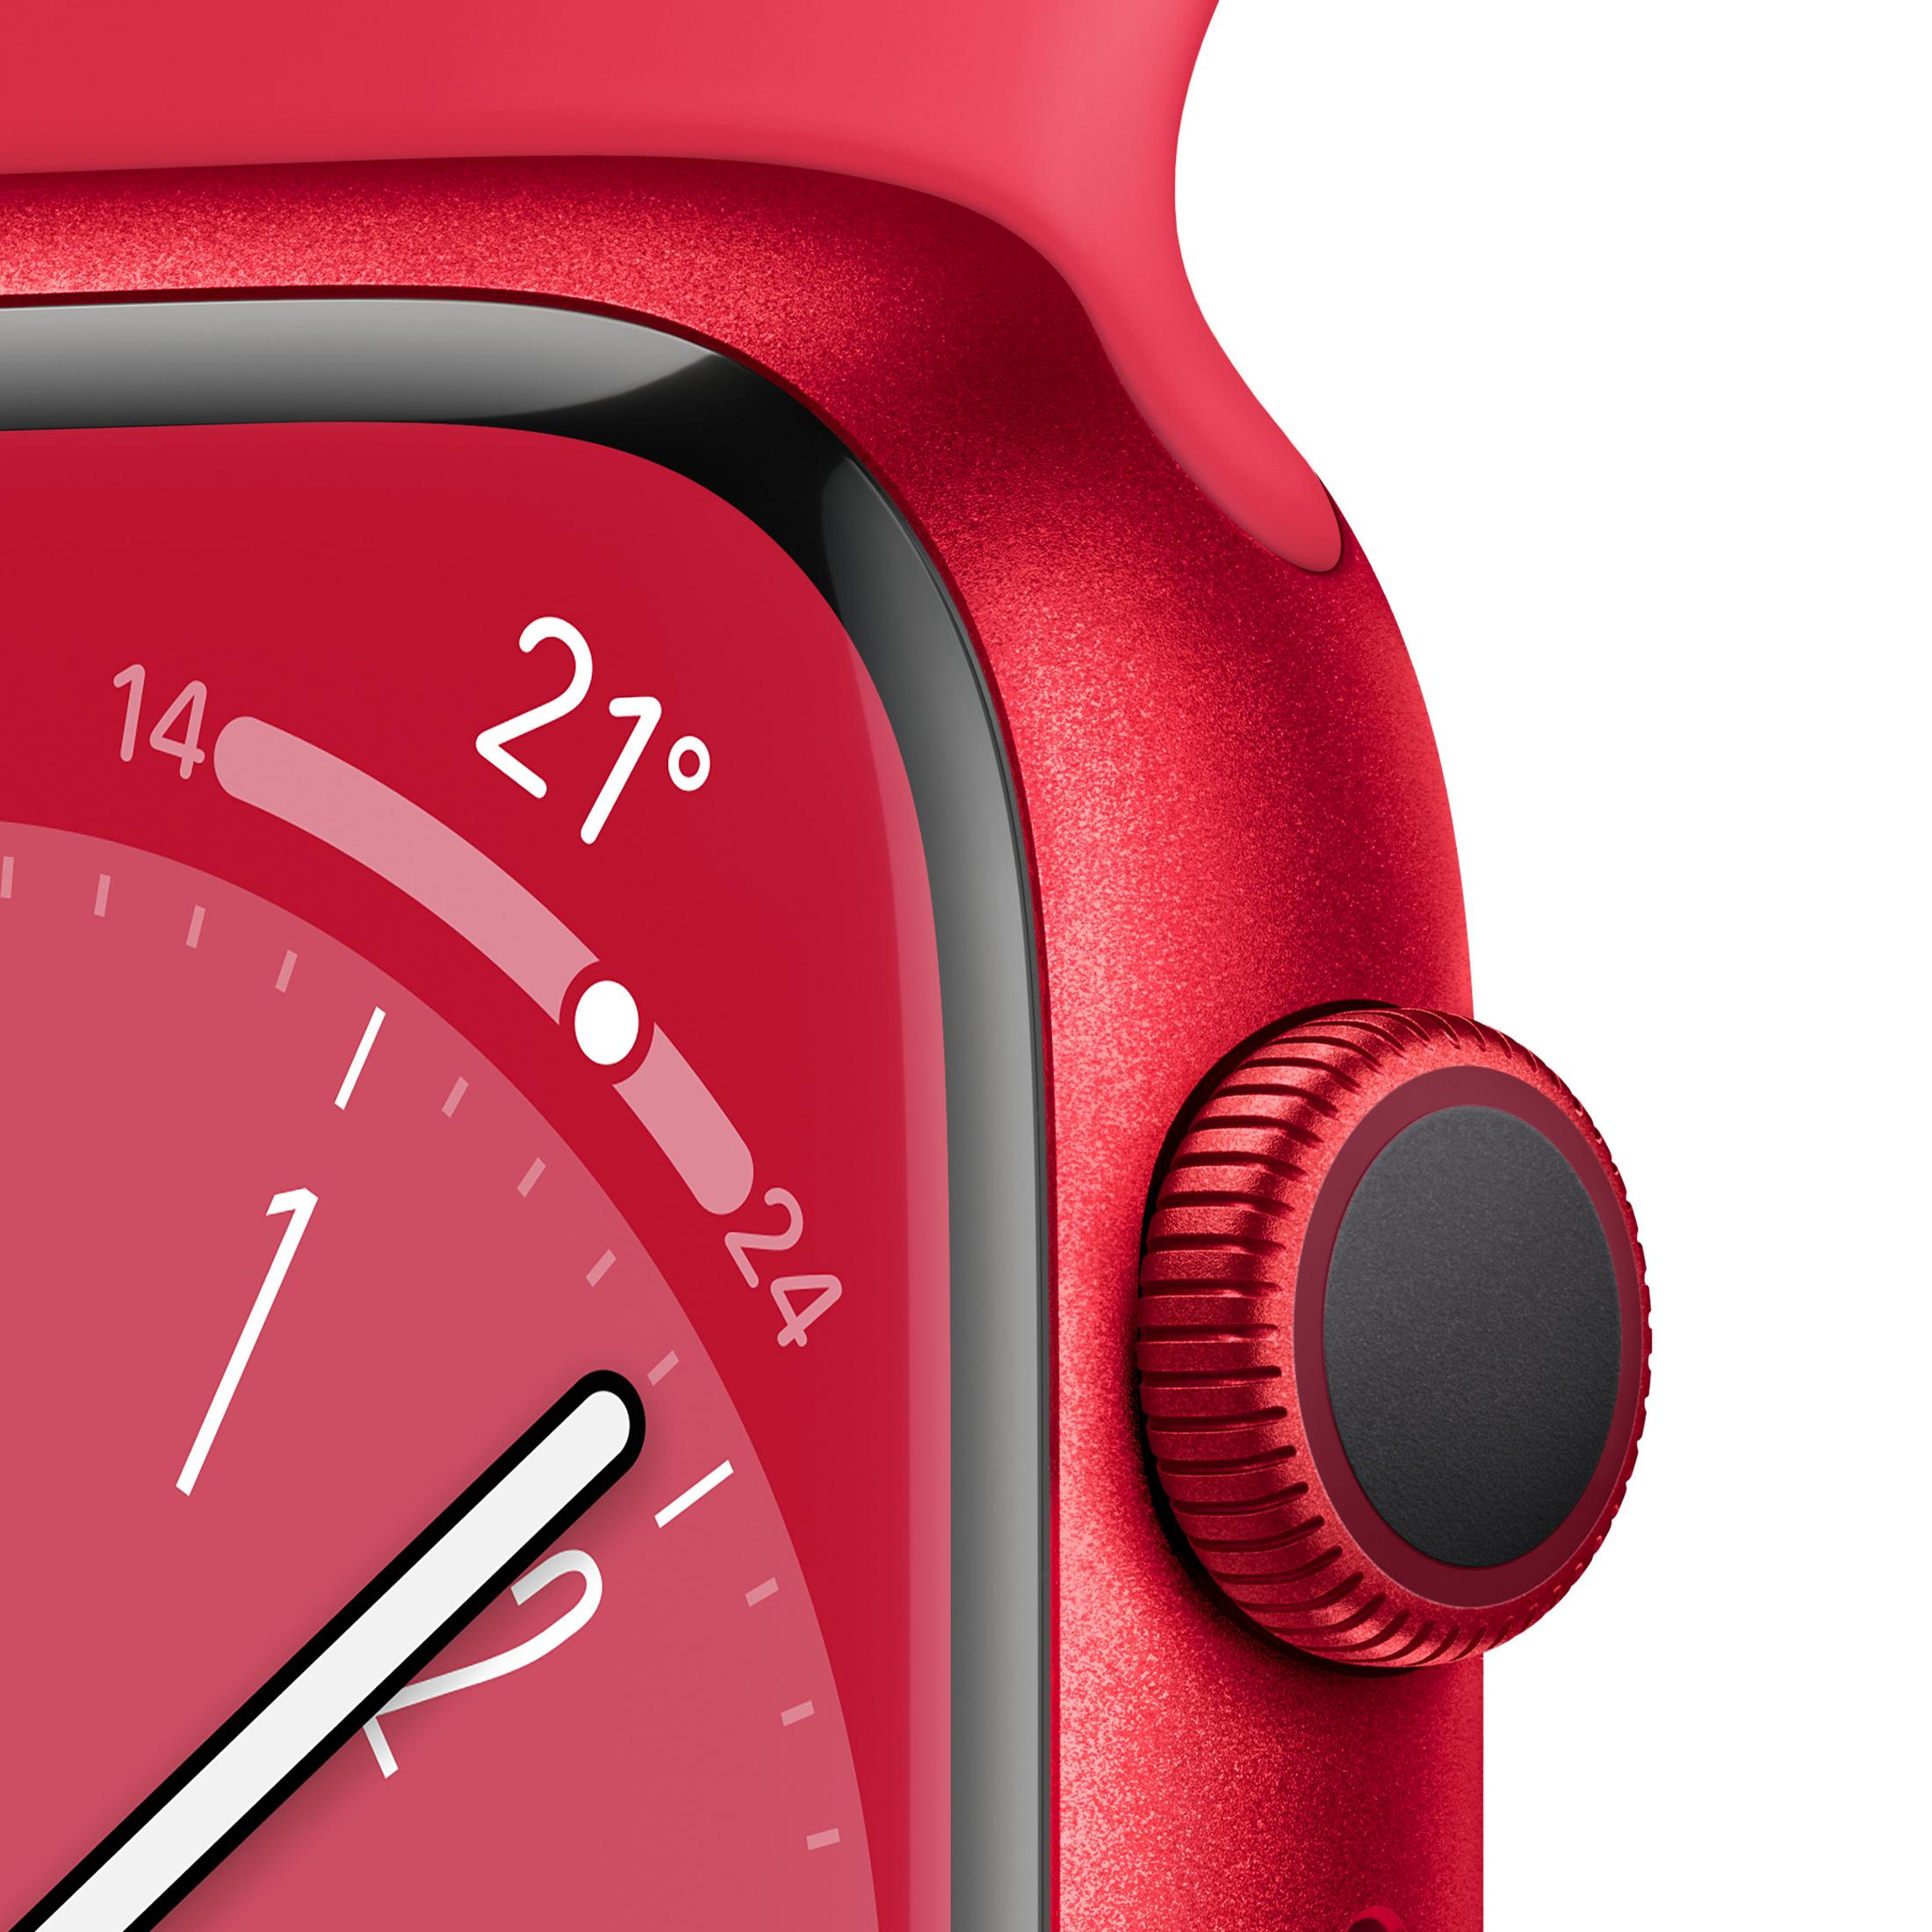 APPLE S8 GPS RED Gehäuse: (PRODUCT)RED W ALU Smartwatch RED - SPORT (PRODUCT)RED, Aluminium Fluorelastomer, 220 140 mm, Armband: 45 REG